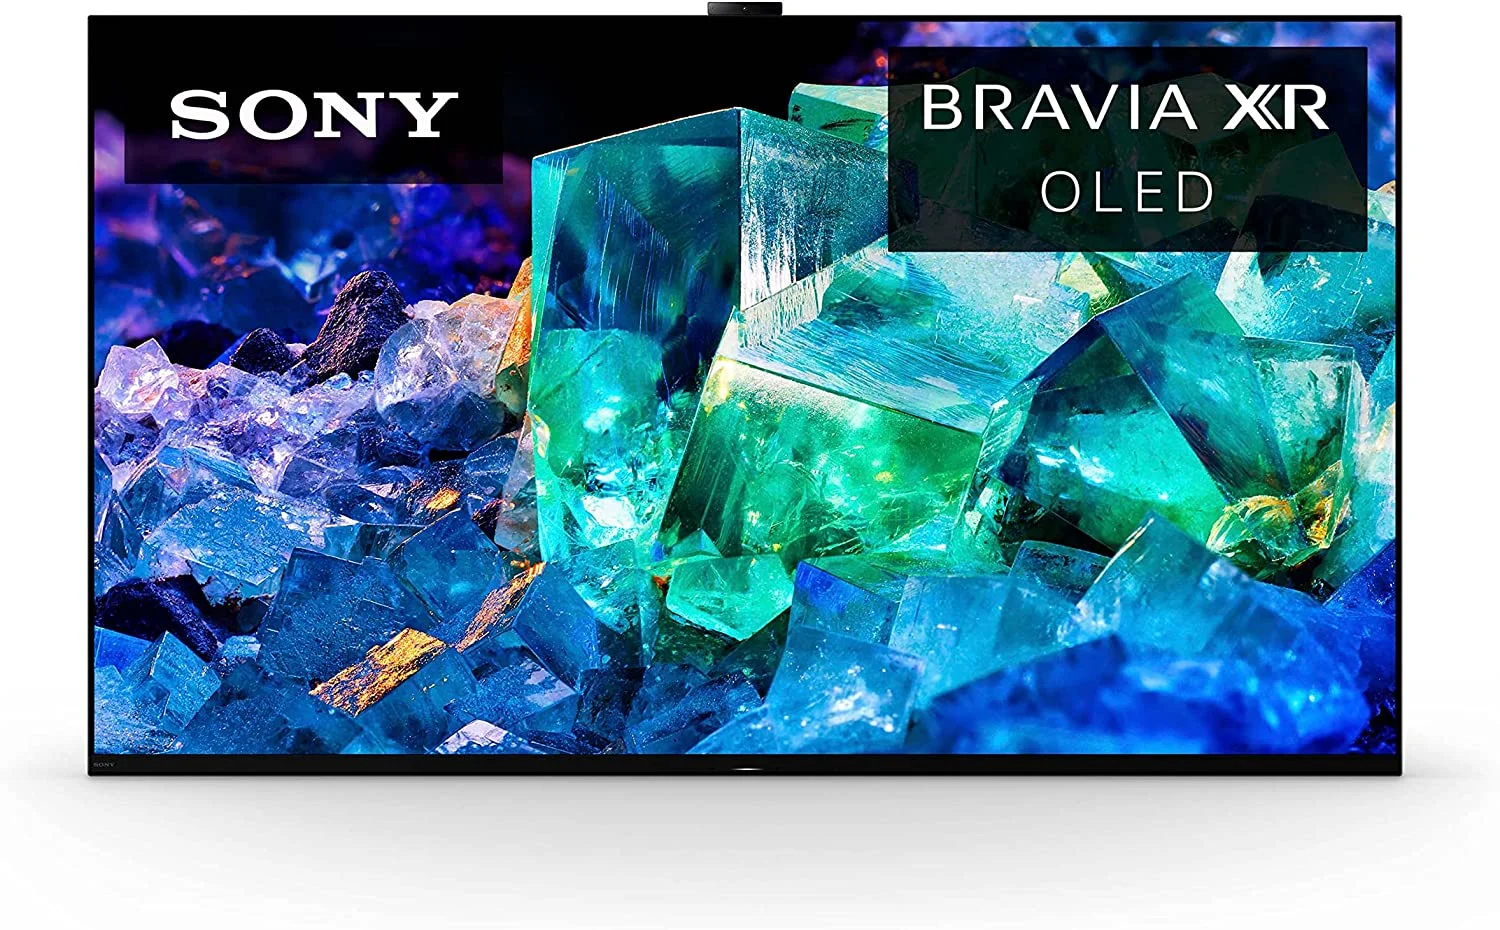 65-inch Sony A95K Bravia XR OLED TV